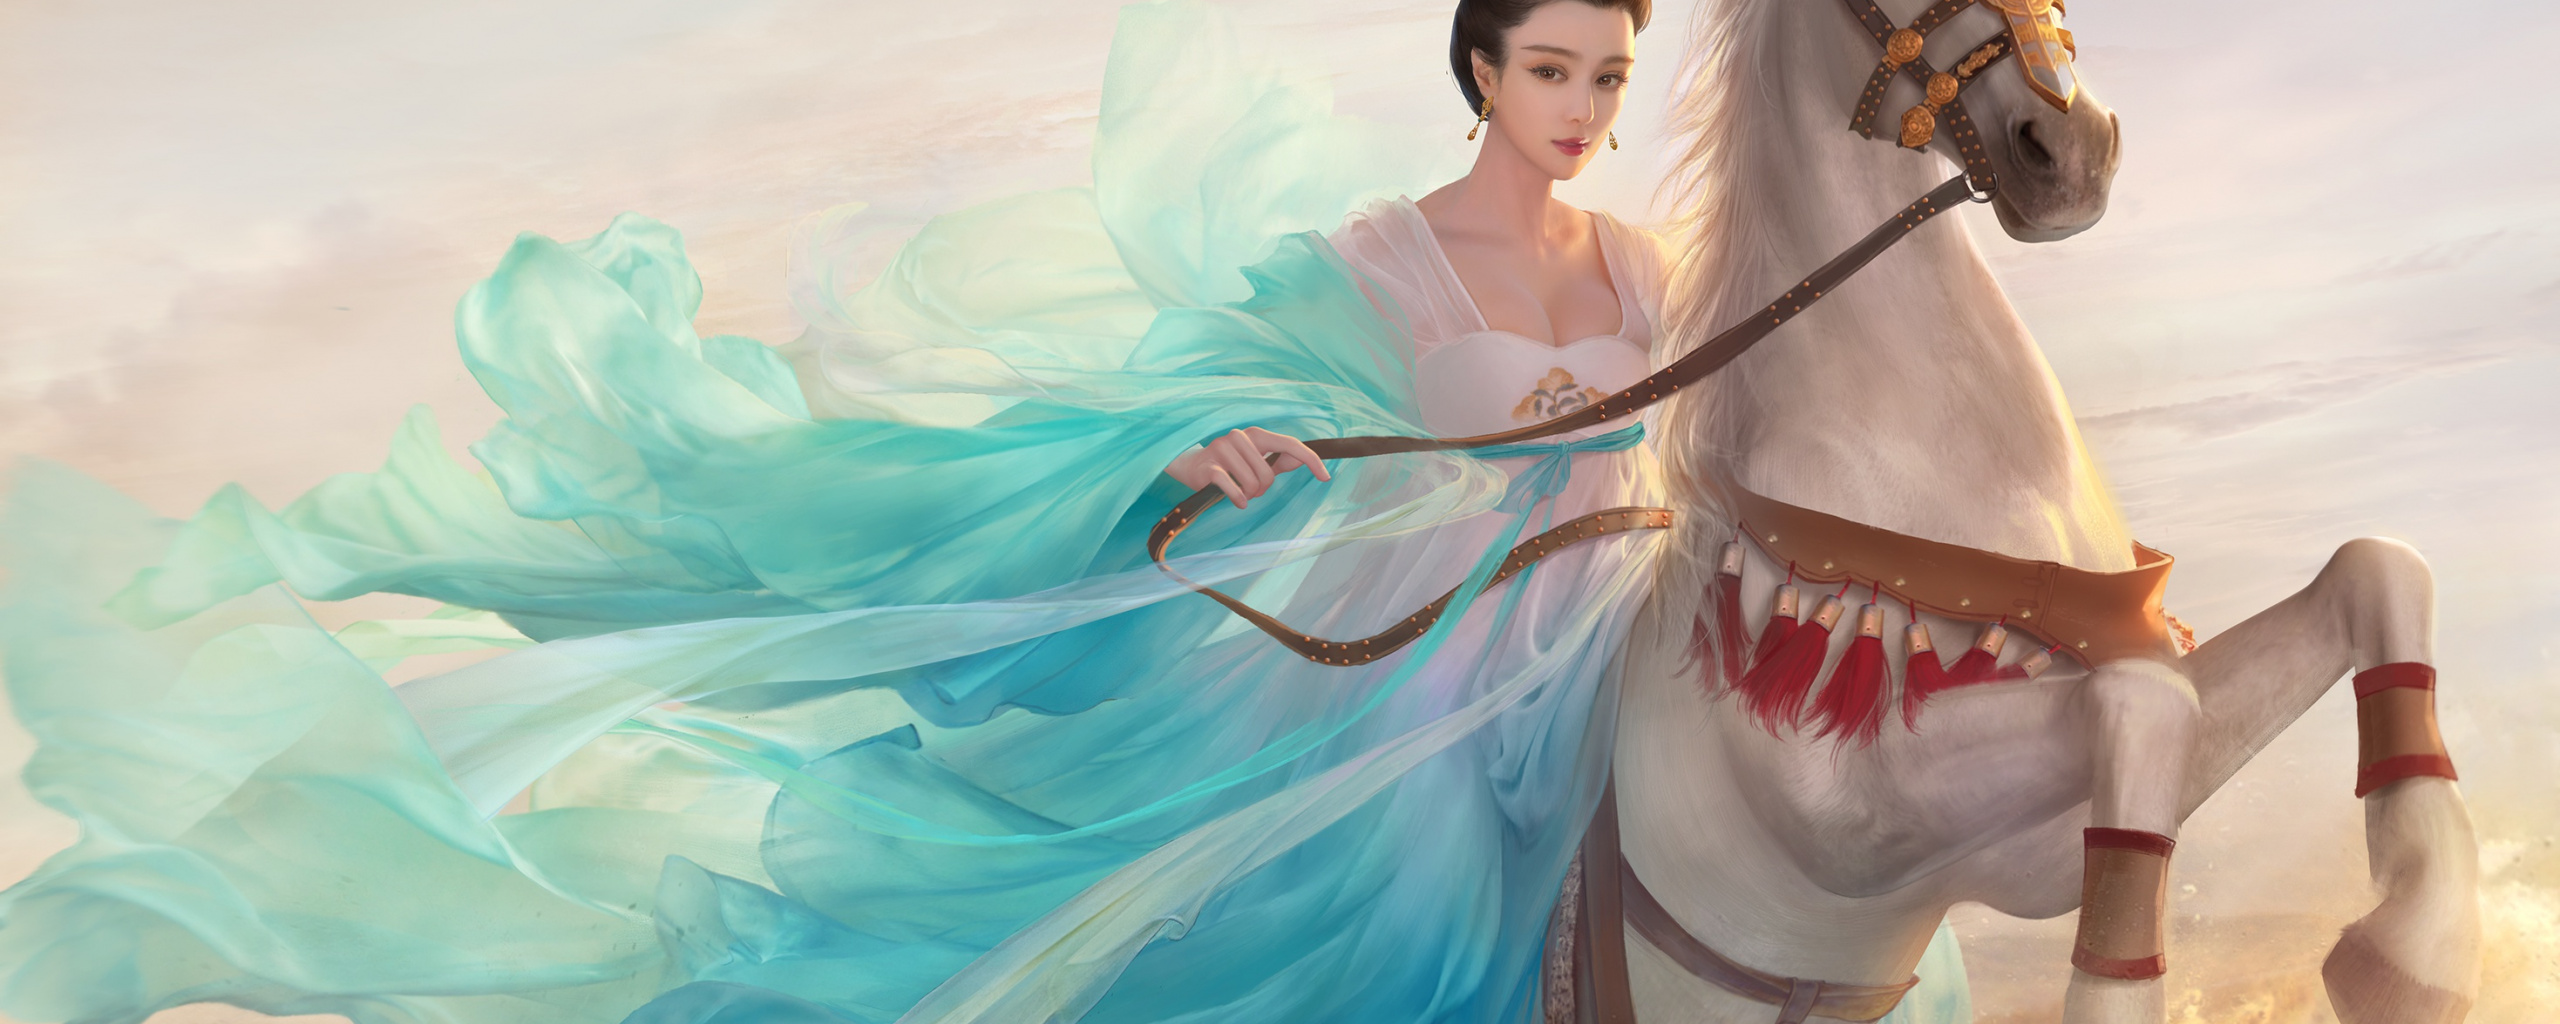 Wallpaper Princess, White Horse, Fan Bingbing, Artwork - Woman Riding Horse Fantasy , HD Wallpaper & Backgrounds